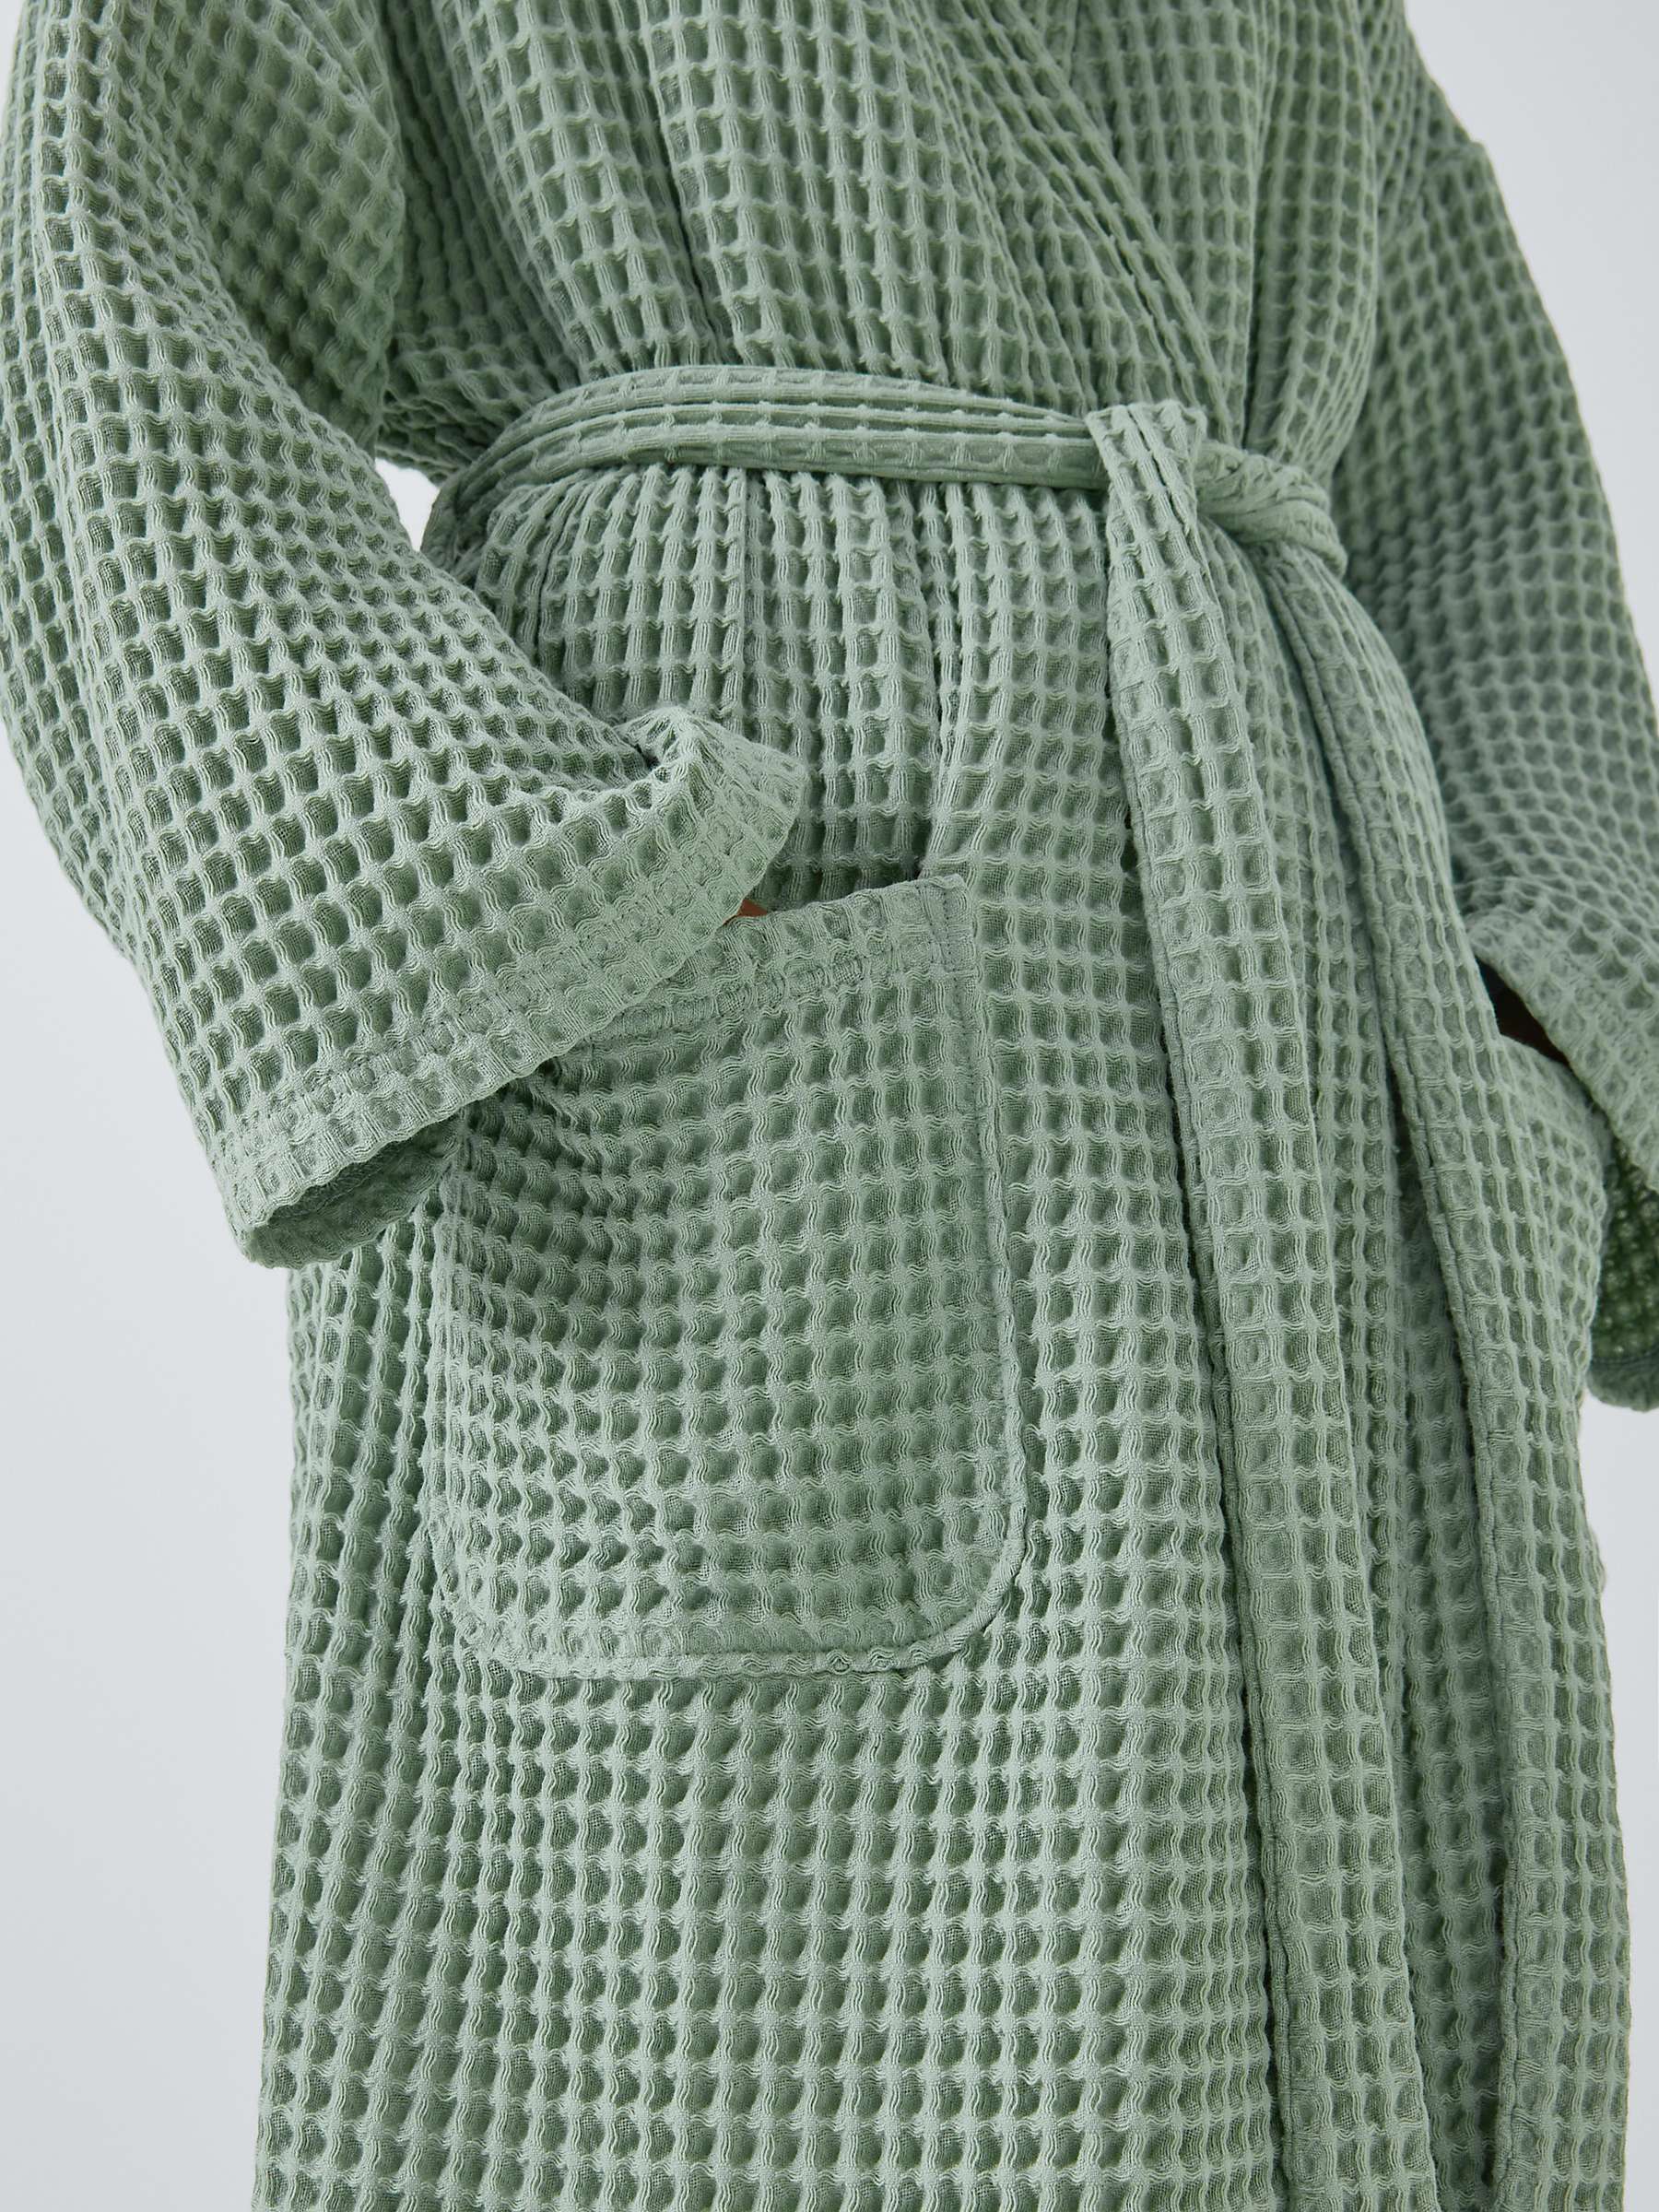 Buy John Lewis Kai Waffle Kimono Dressing Gown Online at johnlewis.com